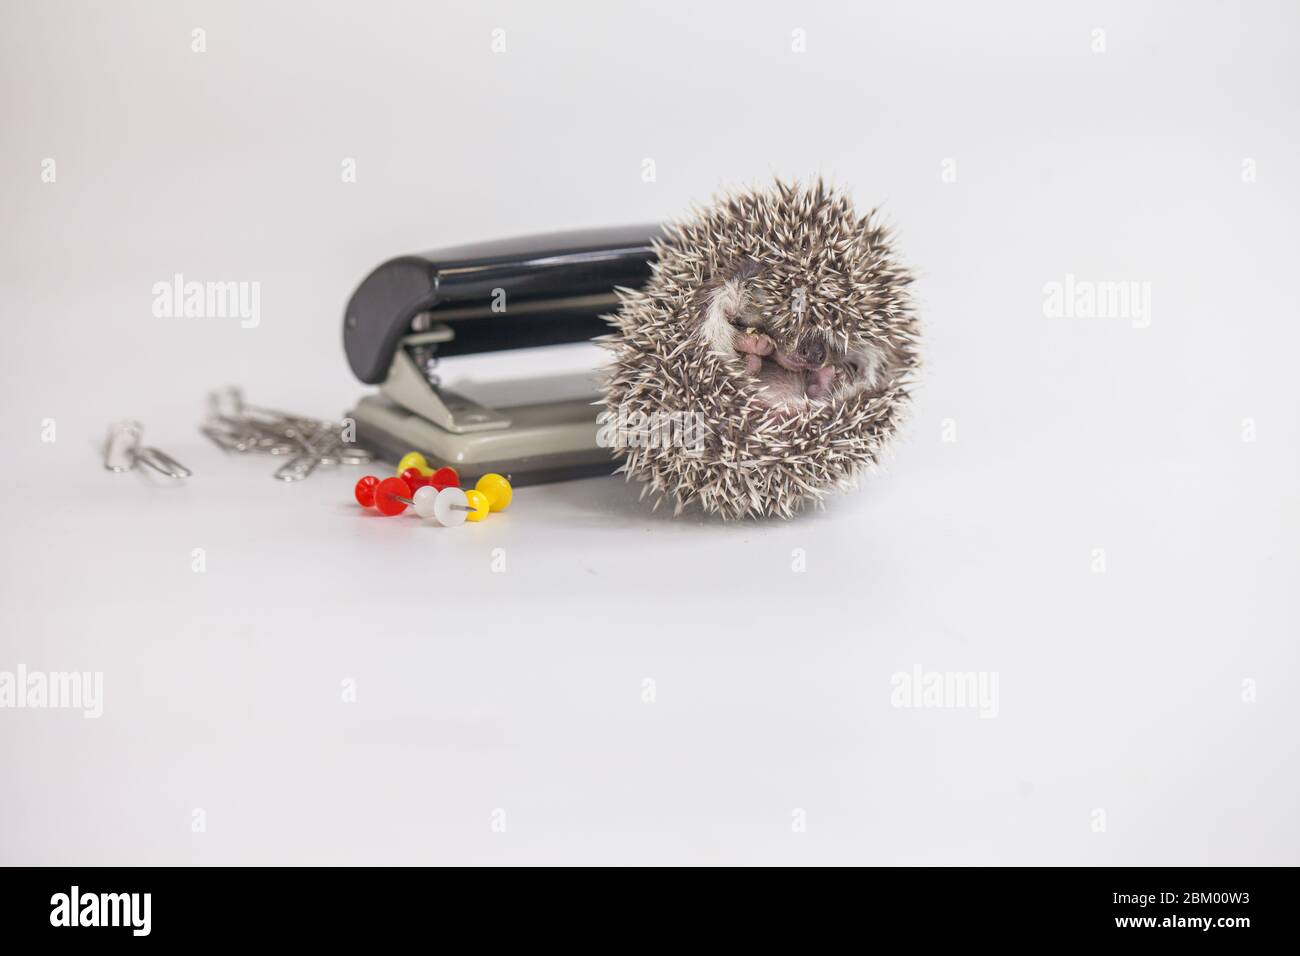 Small hedgehog among office supplies Stock Photo - Alamy